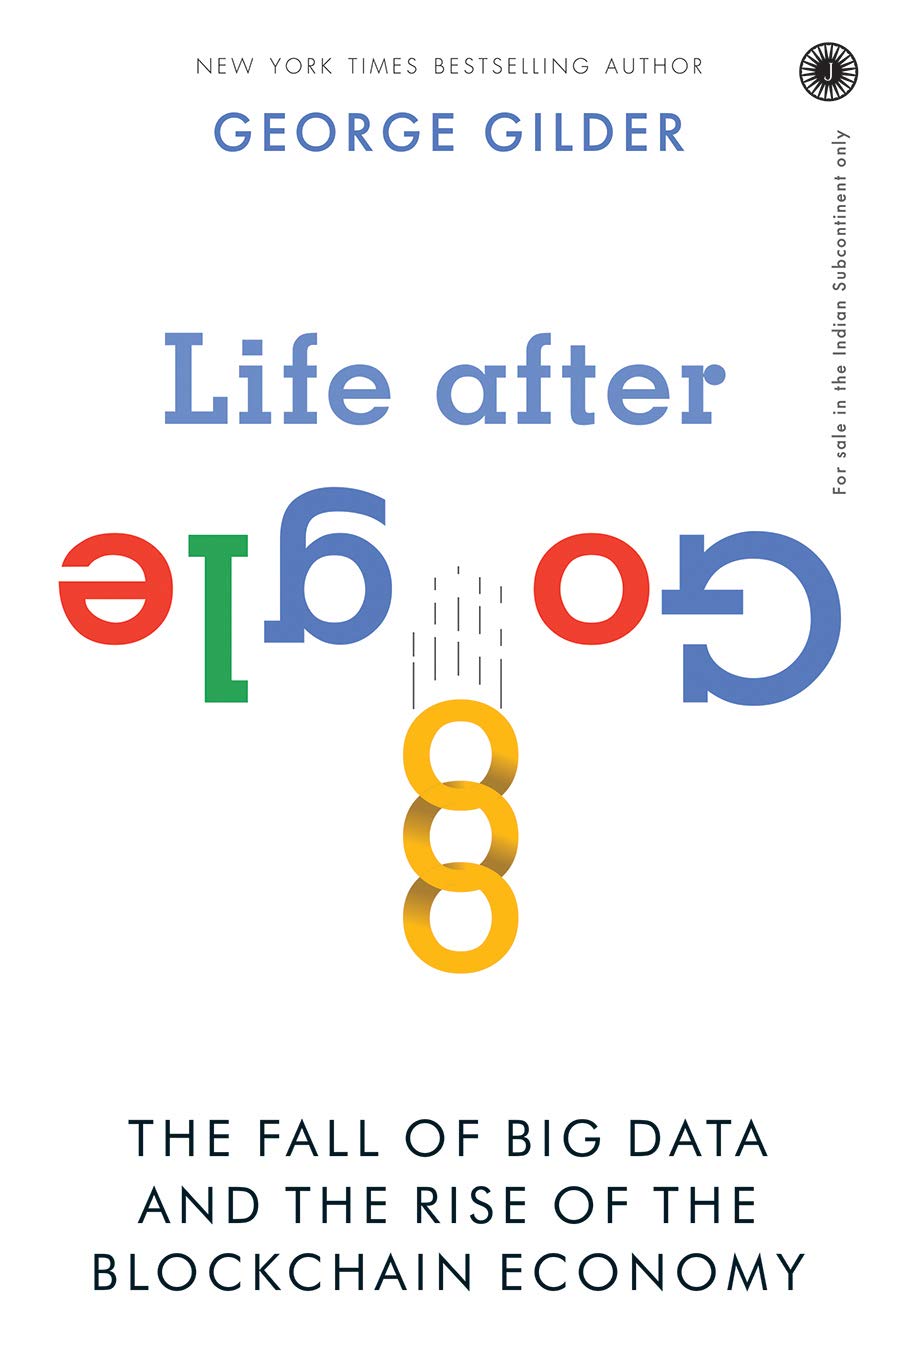 Life After Google